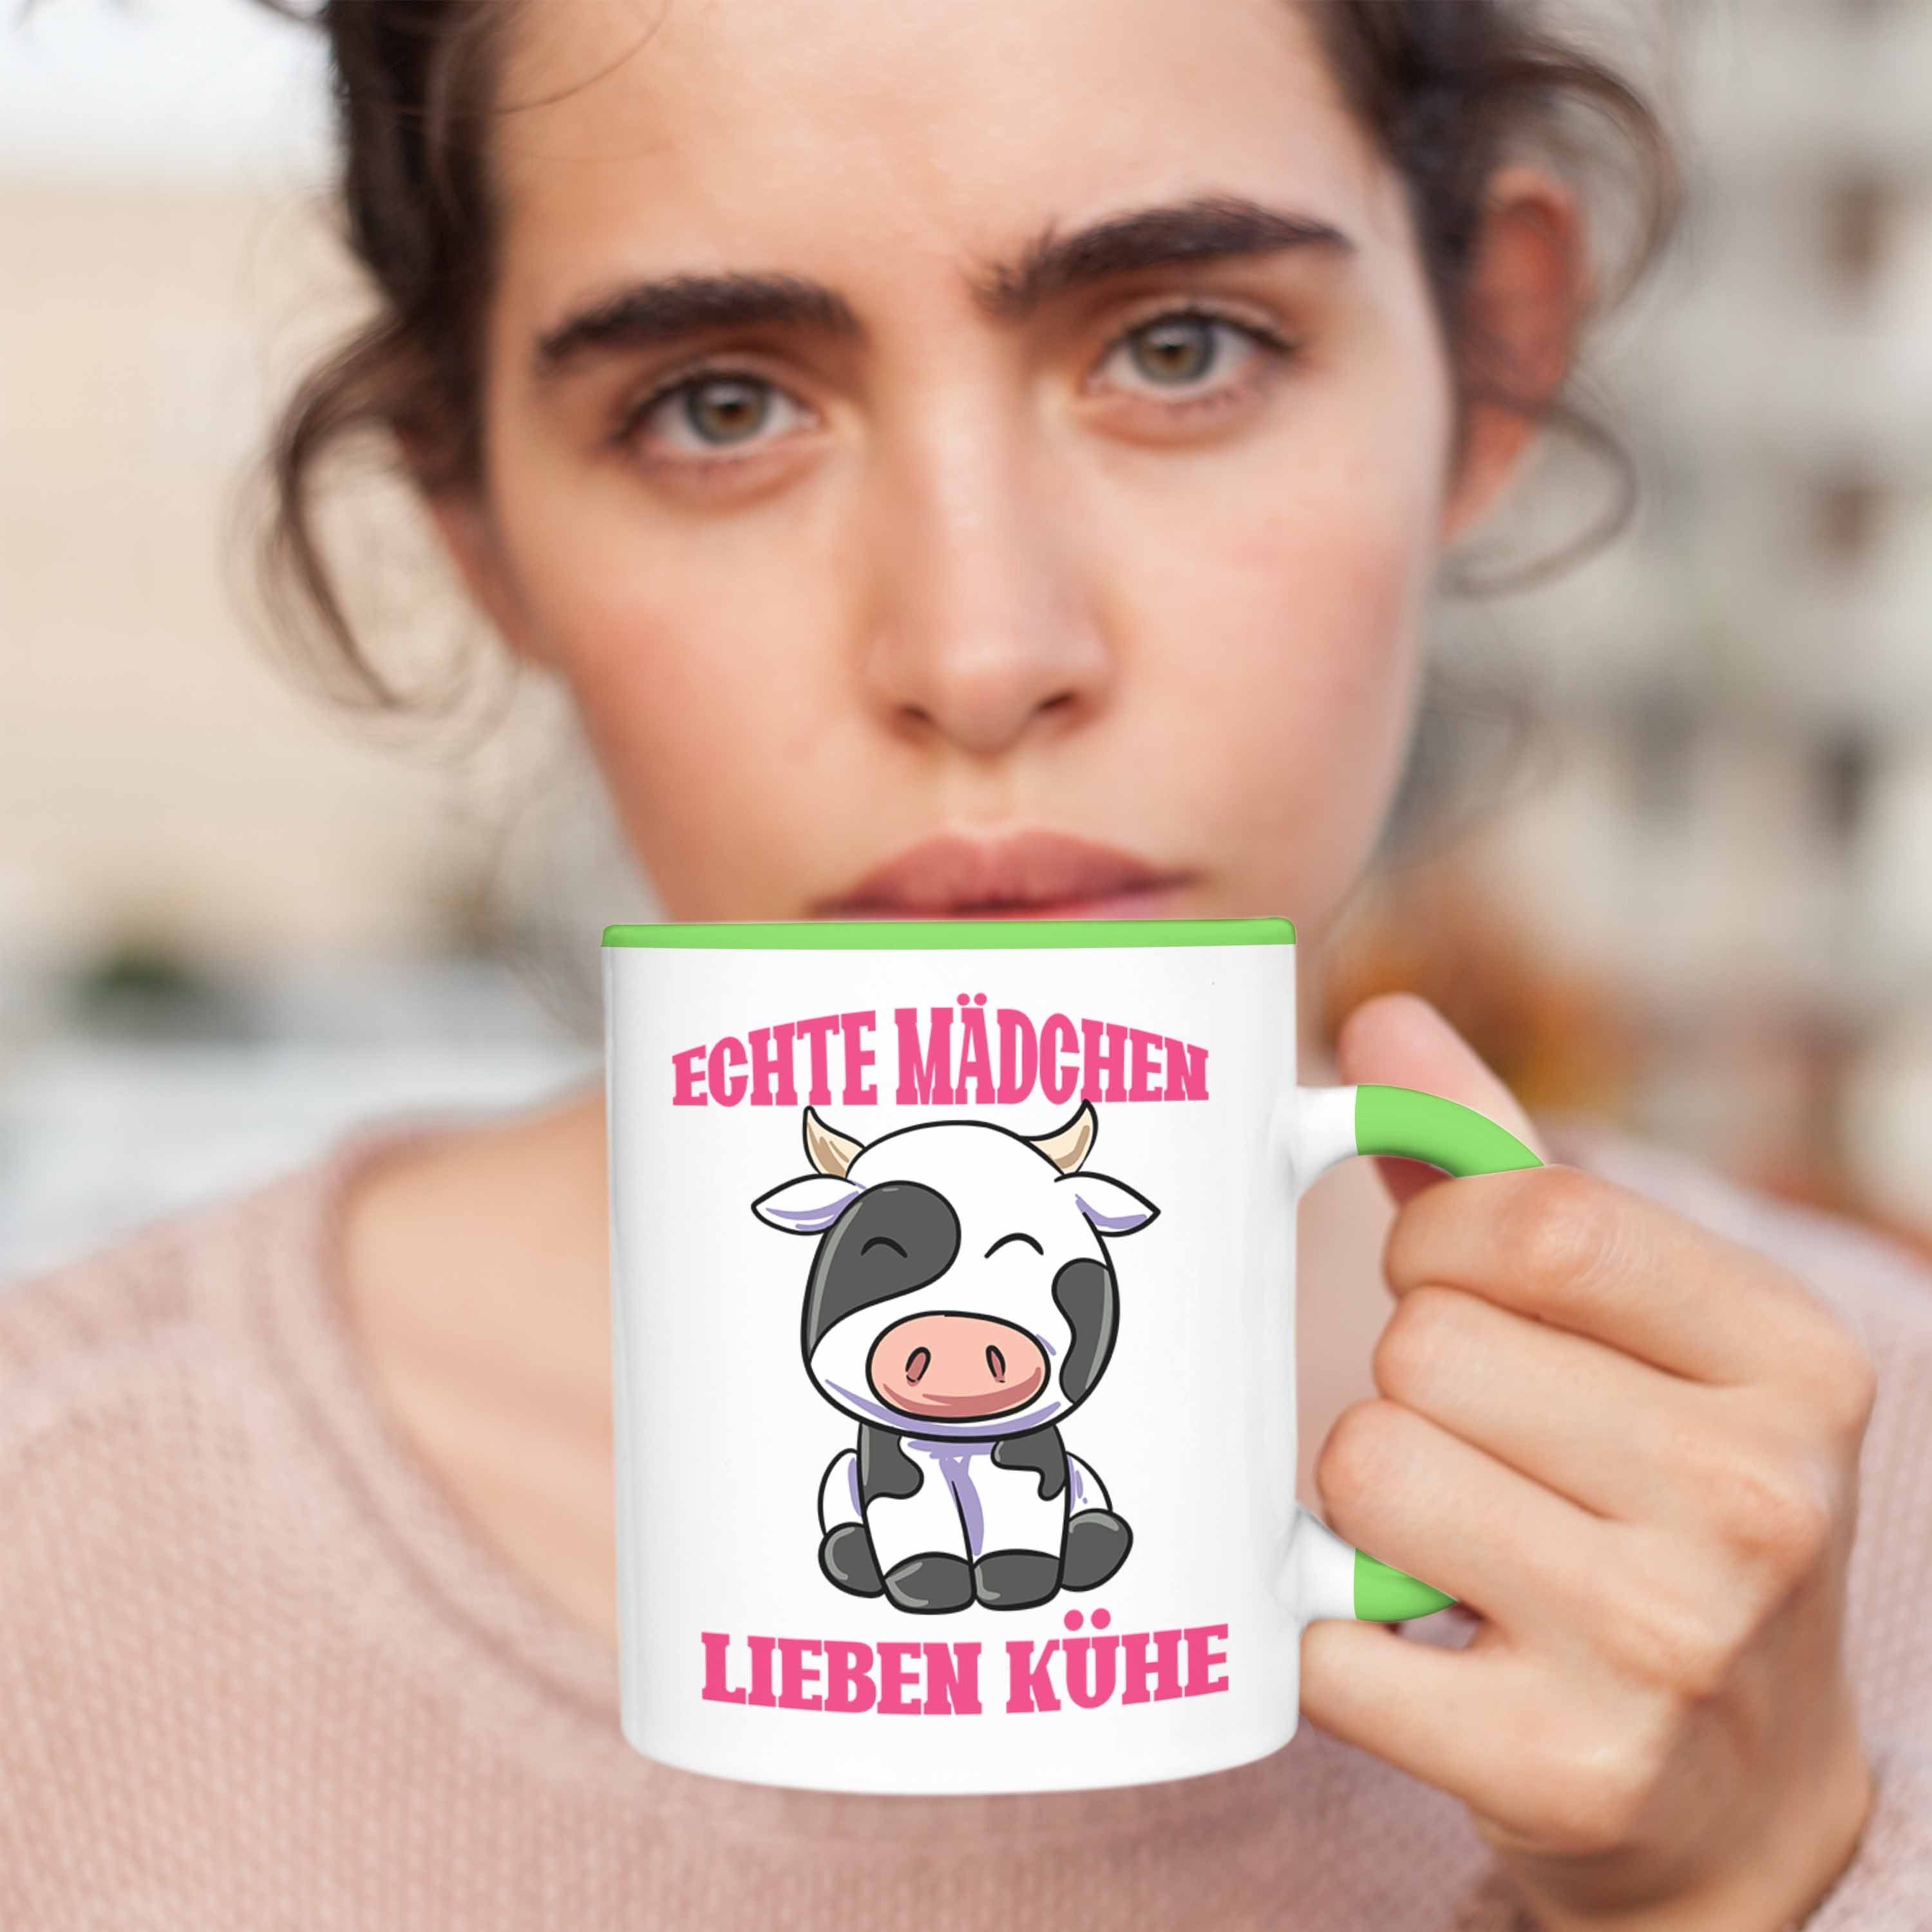 Trendation Tasse Kuh Bäuerin Geschenk Grün Lieben Tasse Gesch Landwirtin Kühe Mädchen Echte